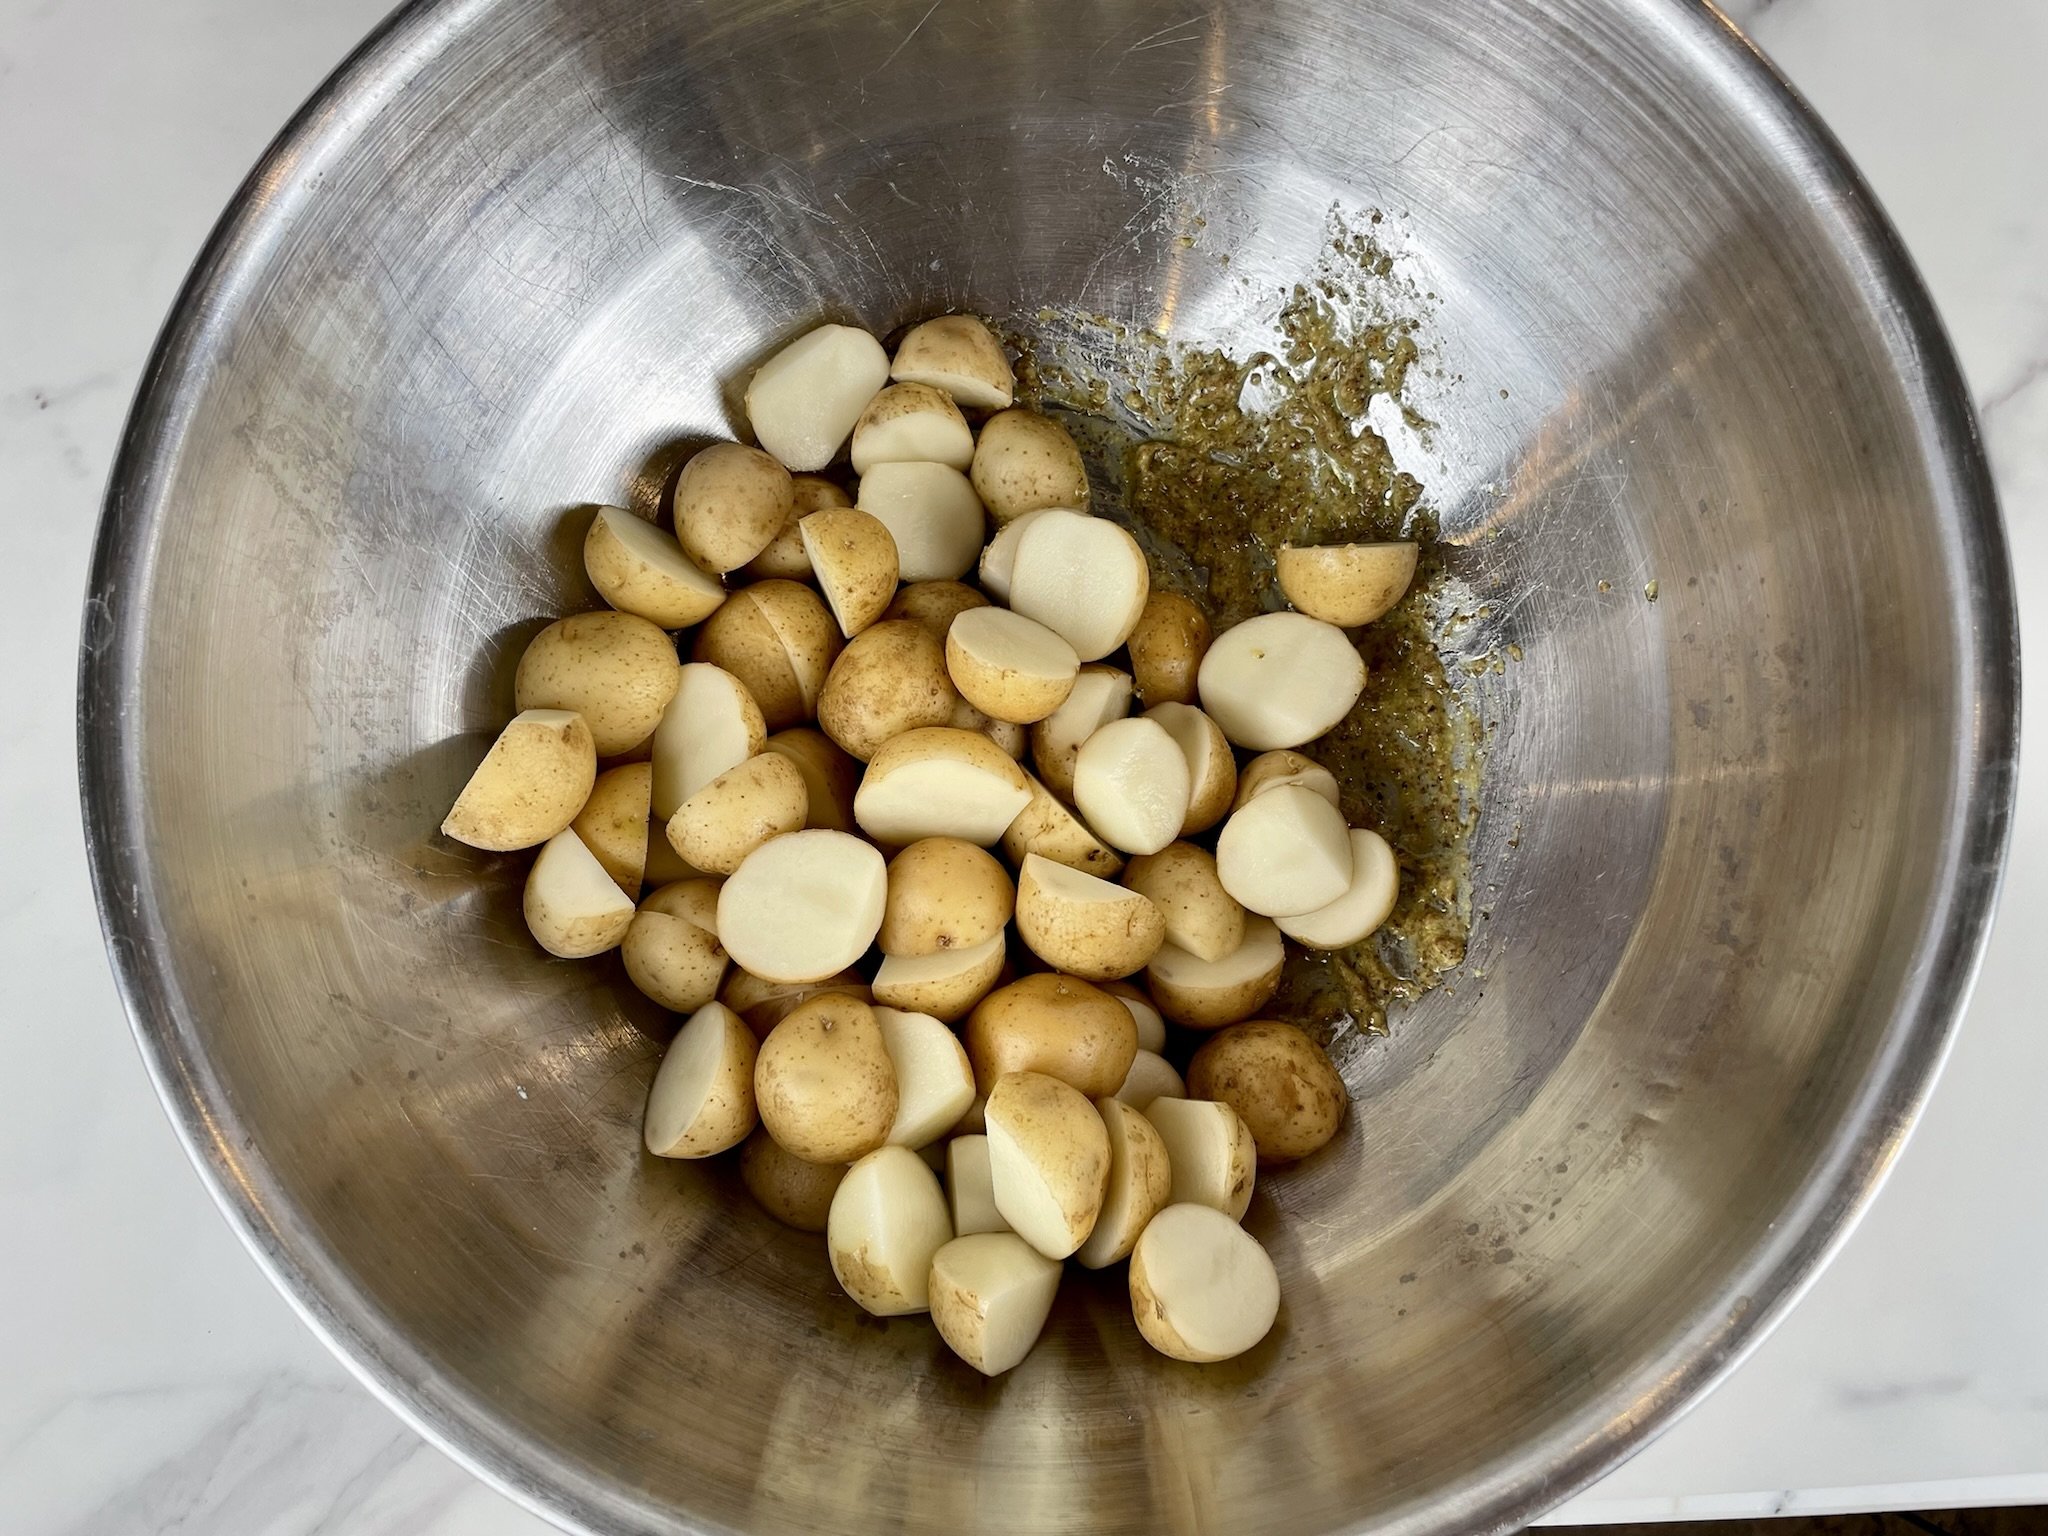 Add potatoes to marinade.